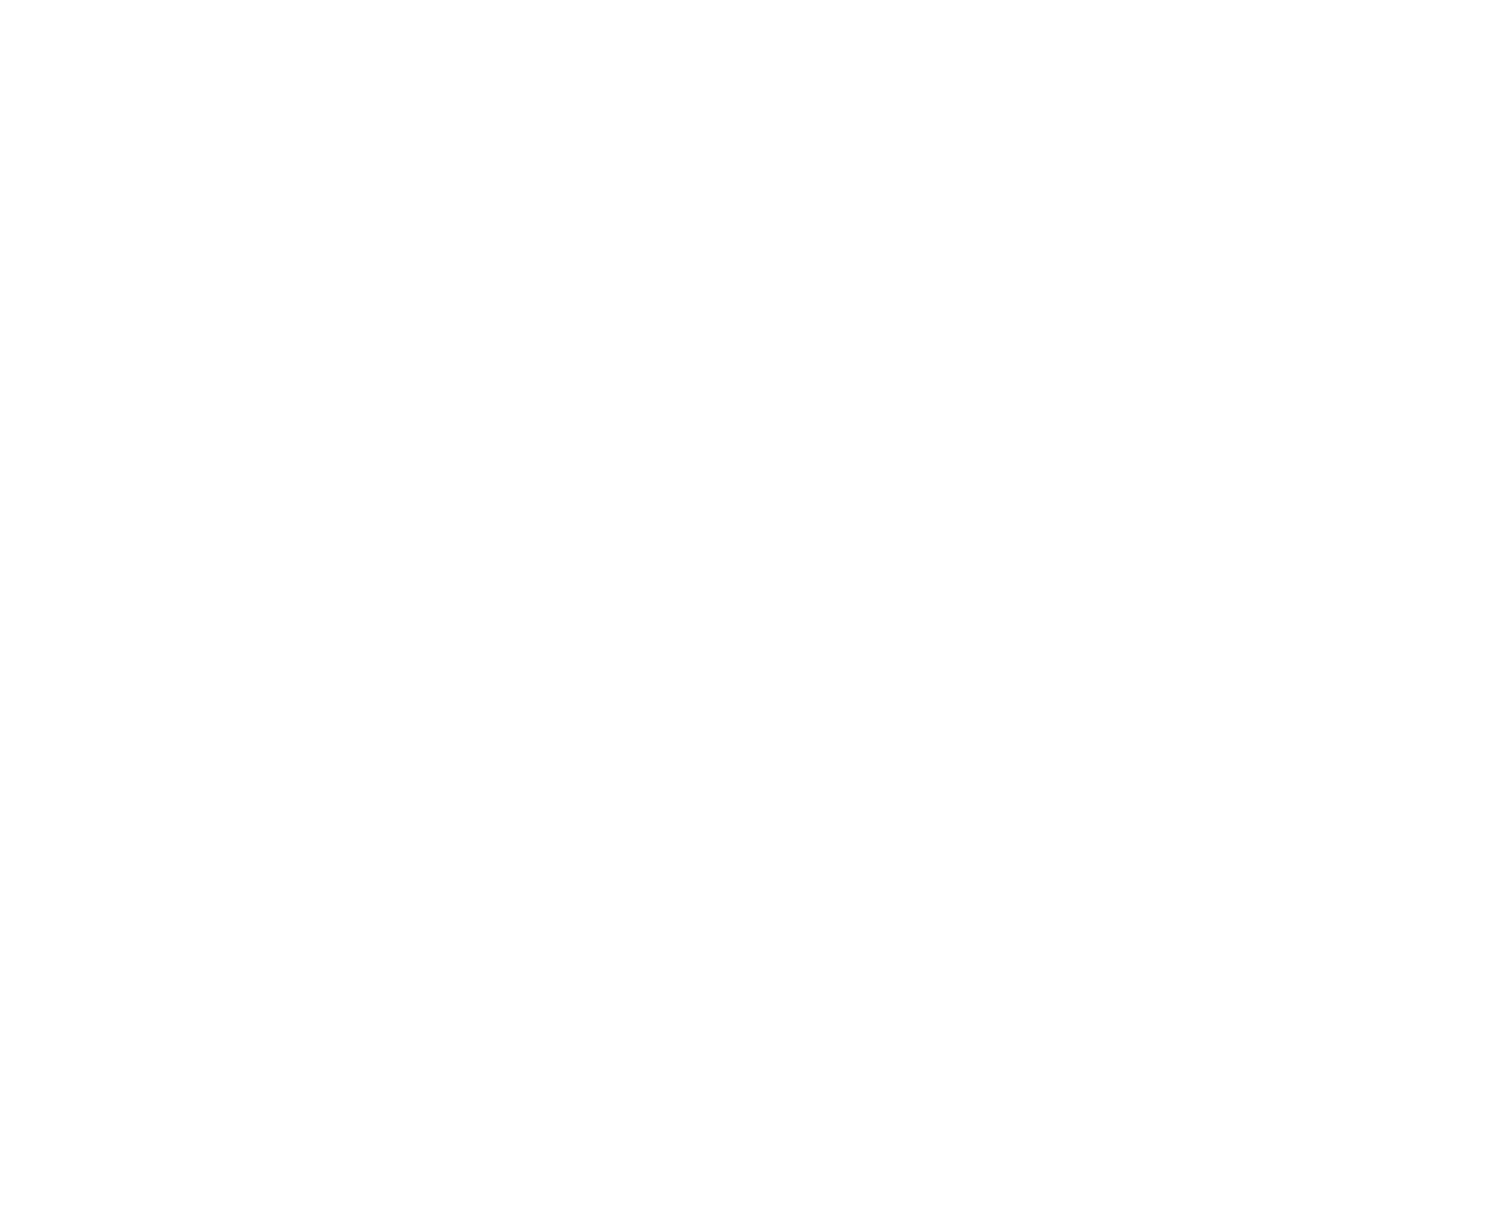 MFMC Logo